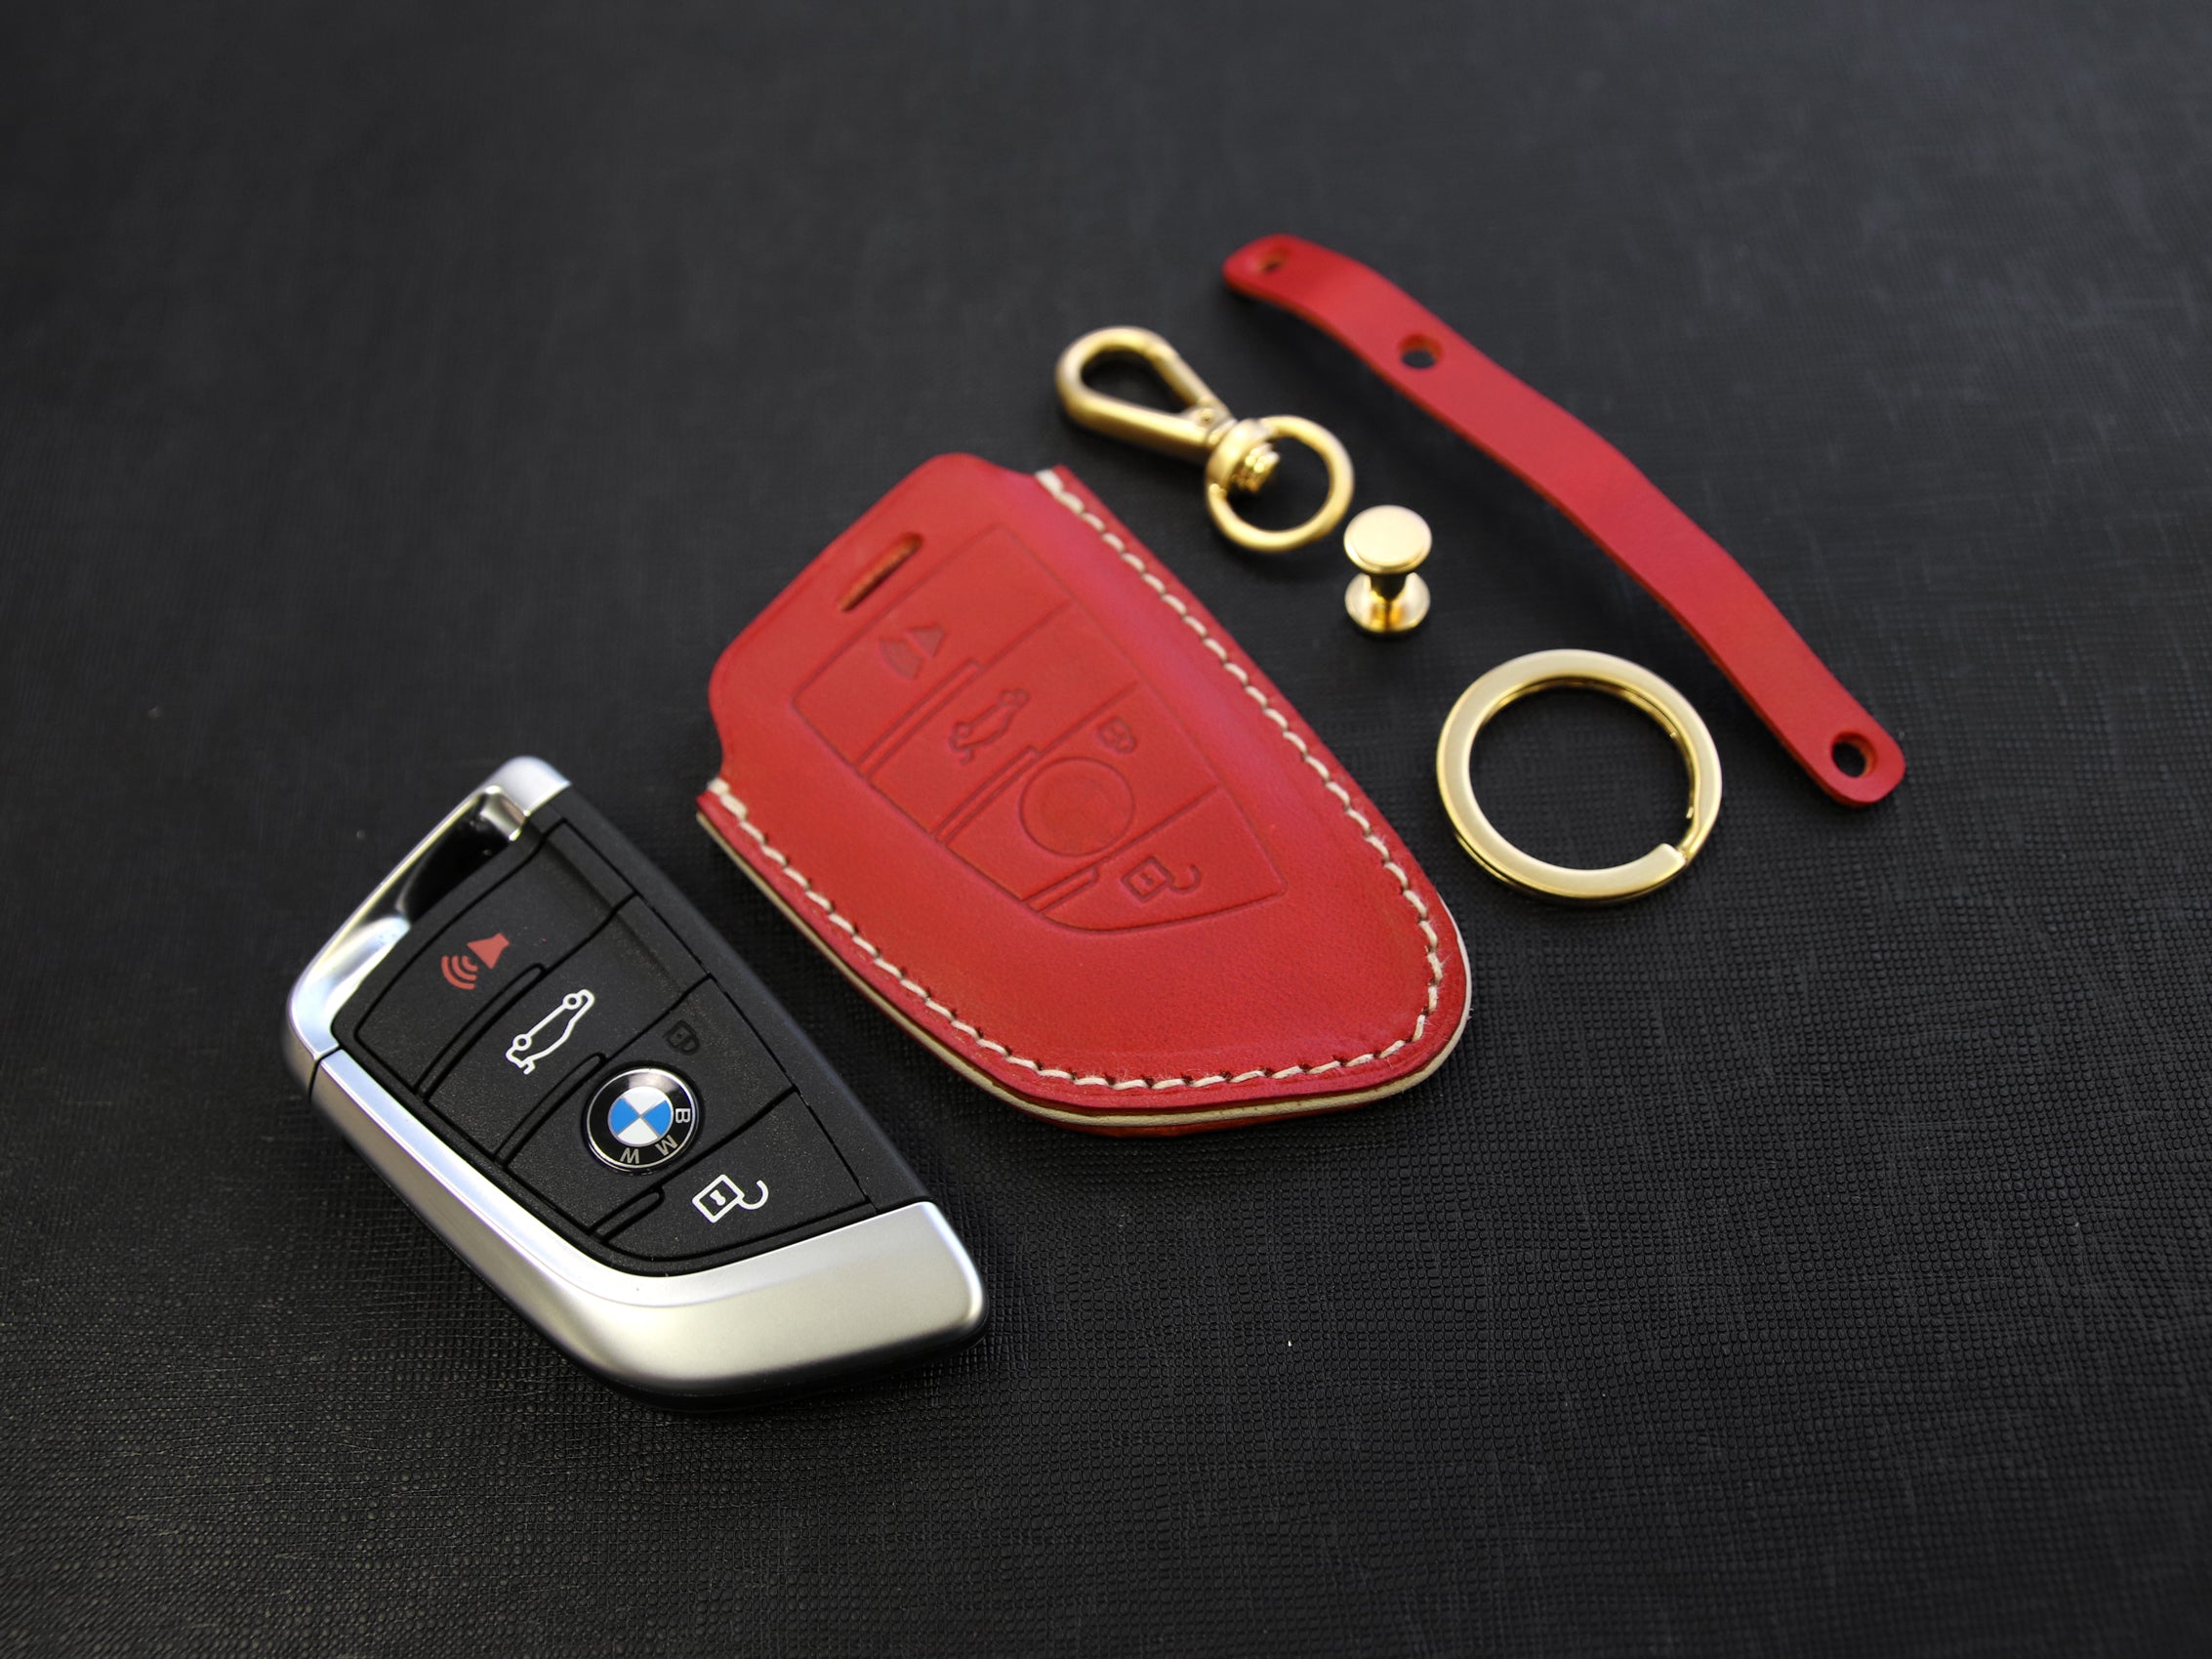  TPHJRM Car Key Fob Cover Smart Leather Key Case,Fit for BMW 1 3  4 5 6 7 Series X1 3 4 5 6 F30 F34 F10 F07 F20 G30 F15 F16,Car